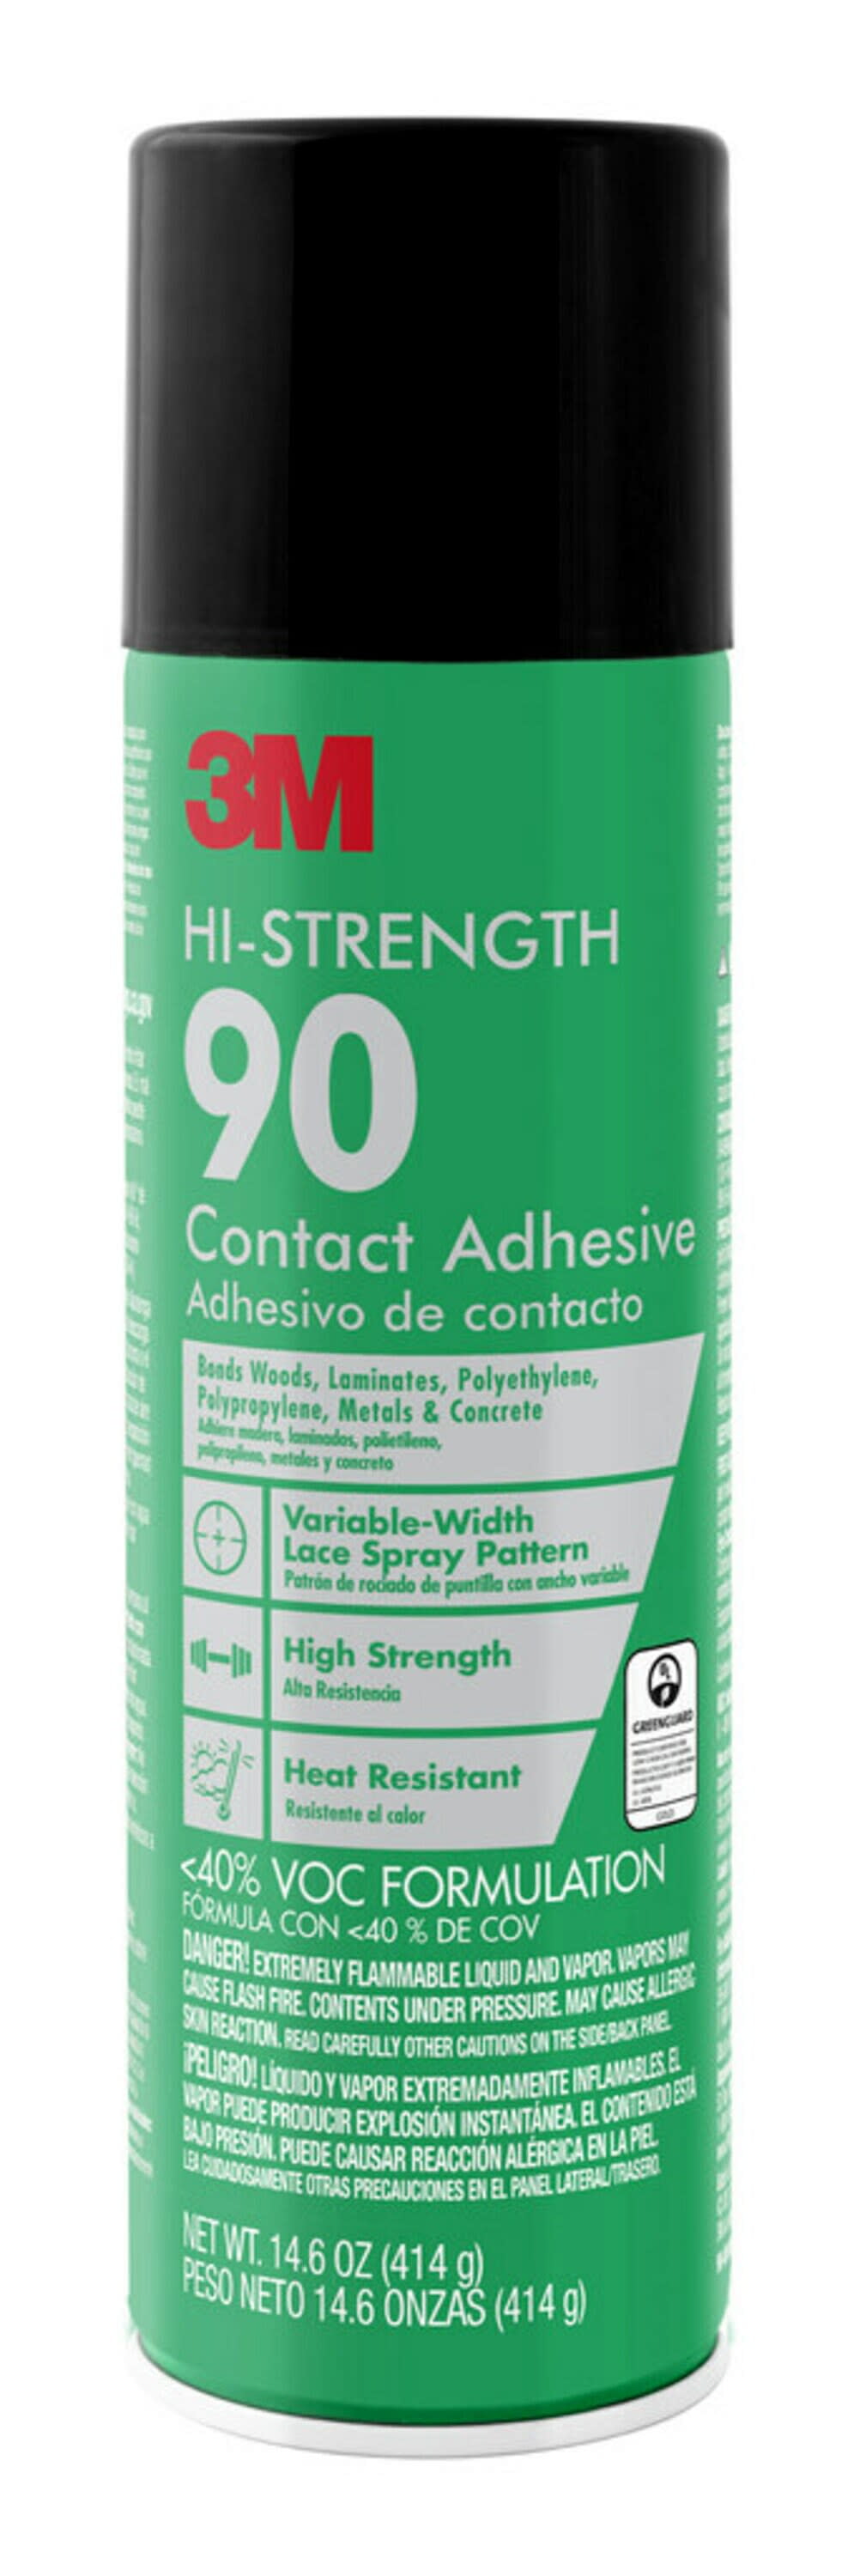 3M Hi-Strength 90 Spray Adhesive - 14.6 oz